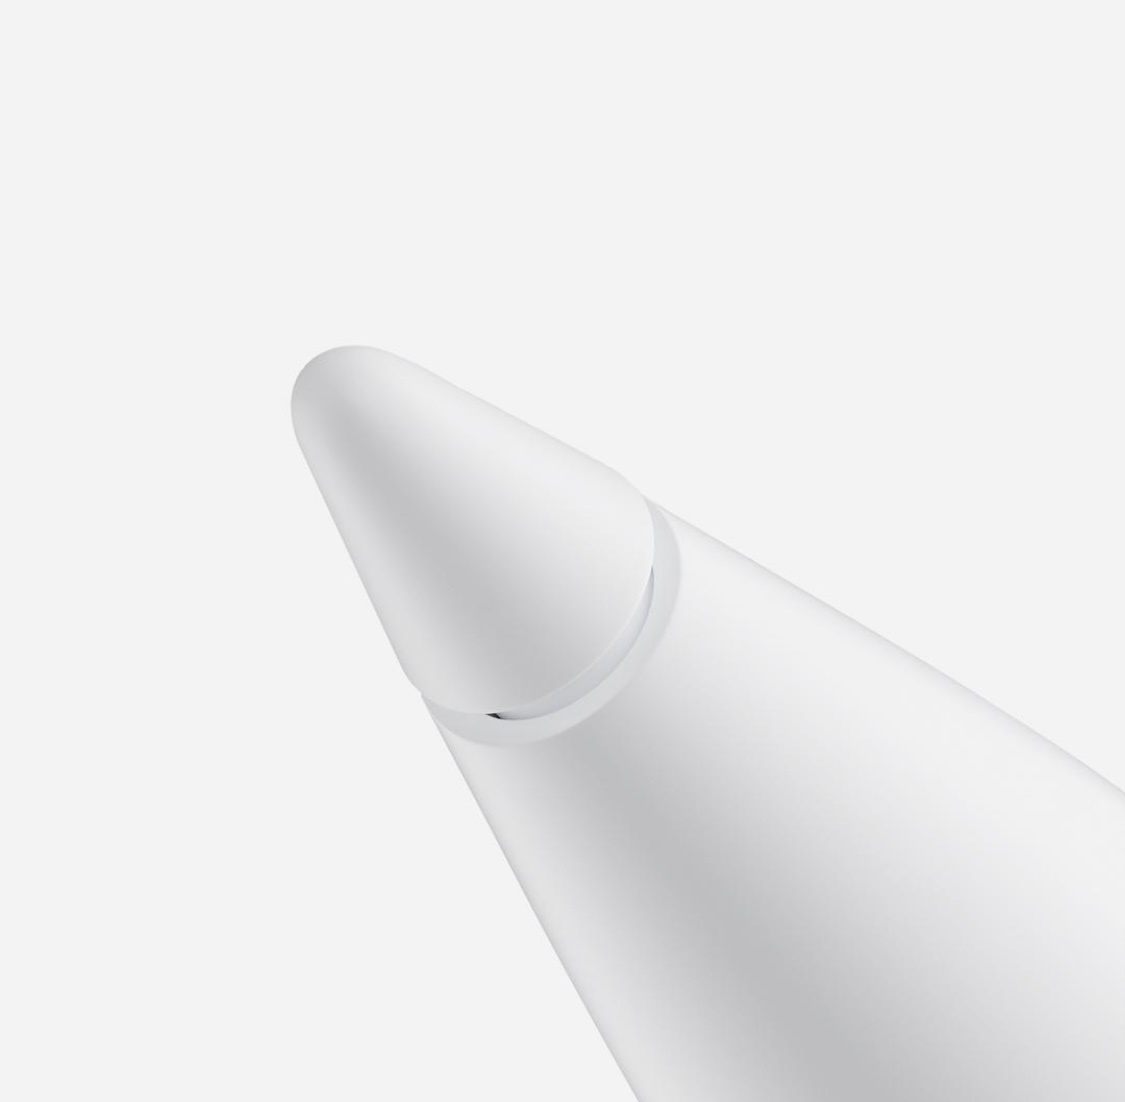 Xiaomi Smart Pen - Stylus - TechPunt